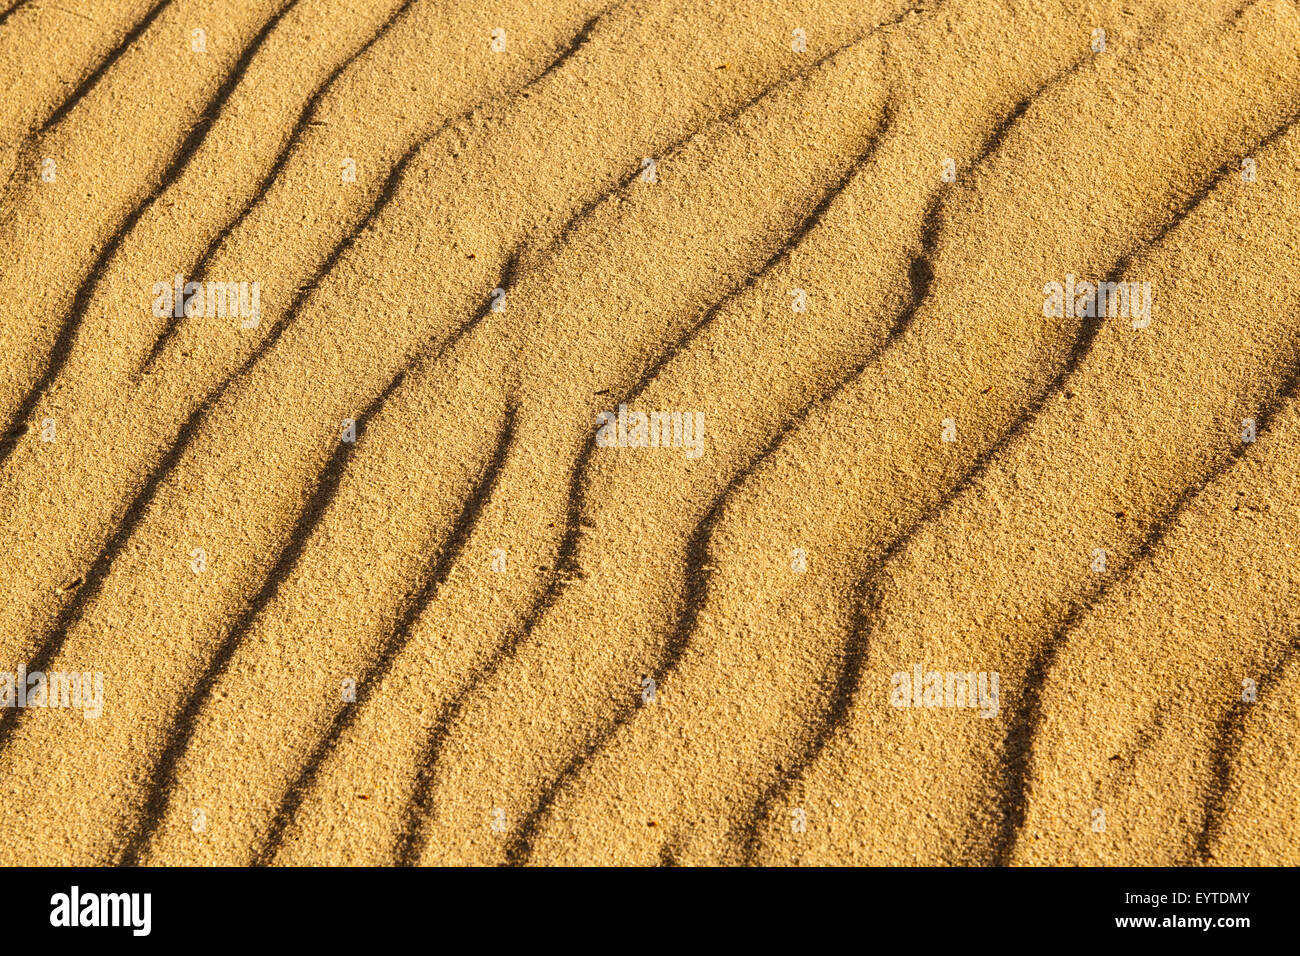 Sand, sample, ripple marks, Stock Photo